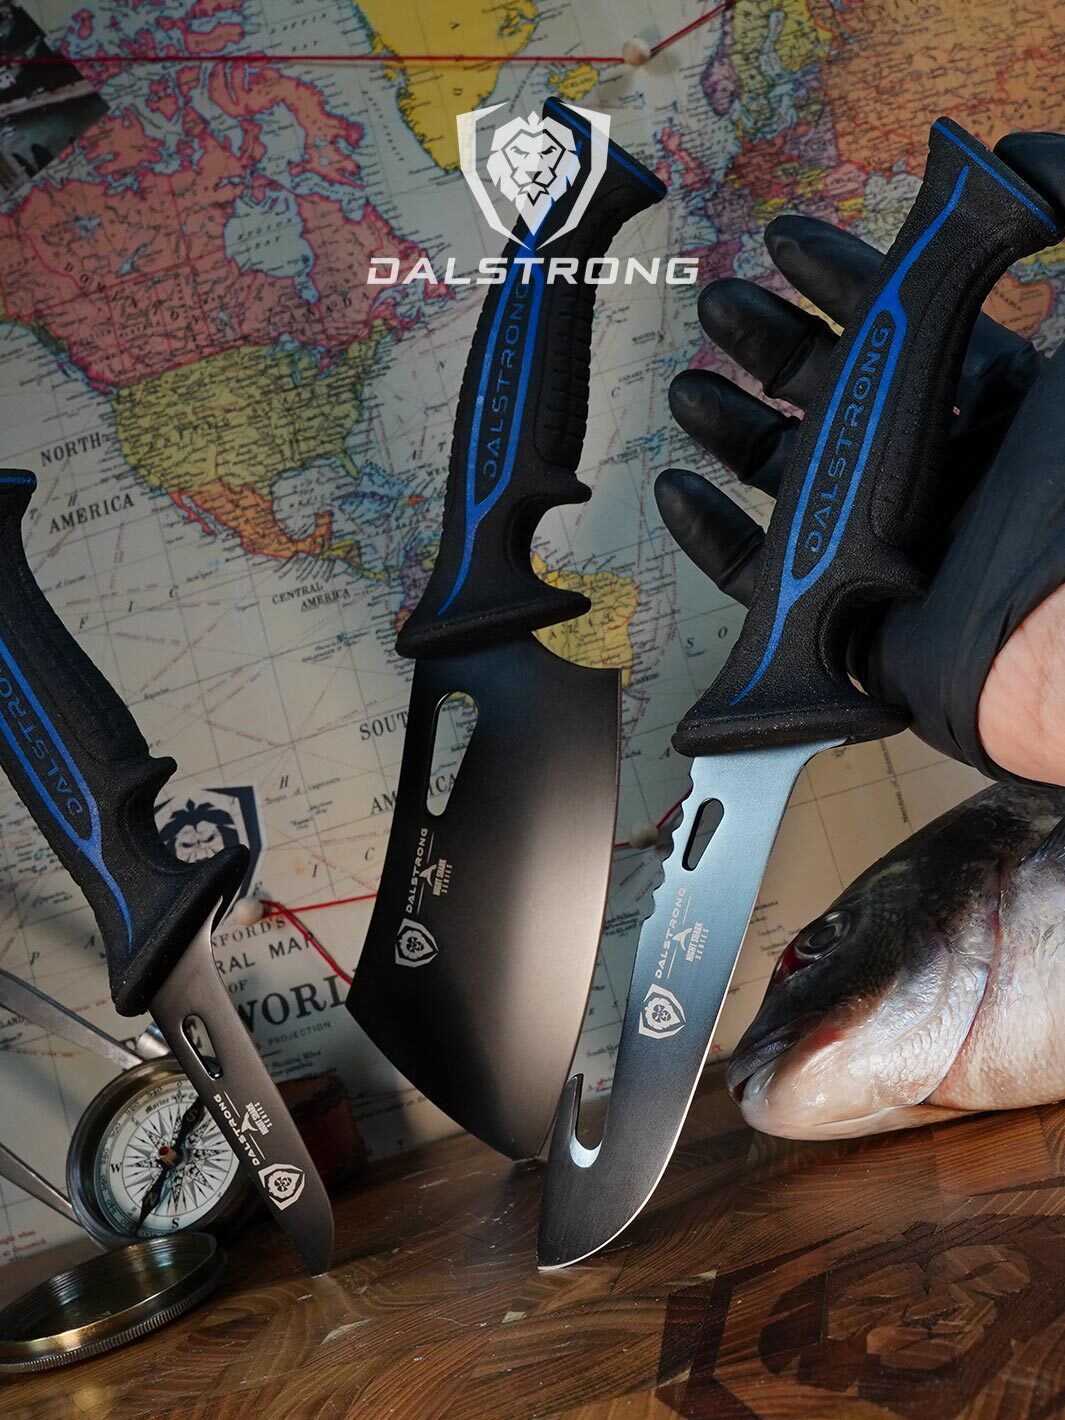 3-Piece Knife Set | Boning Knife, Hook Knife, Mini Cleaver | Night Shark Series | NSF Certified | Dalstrong ©